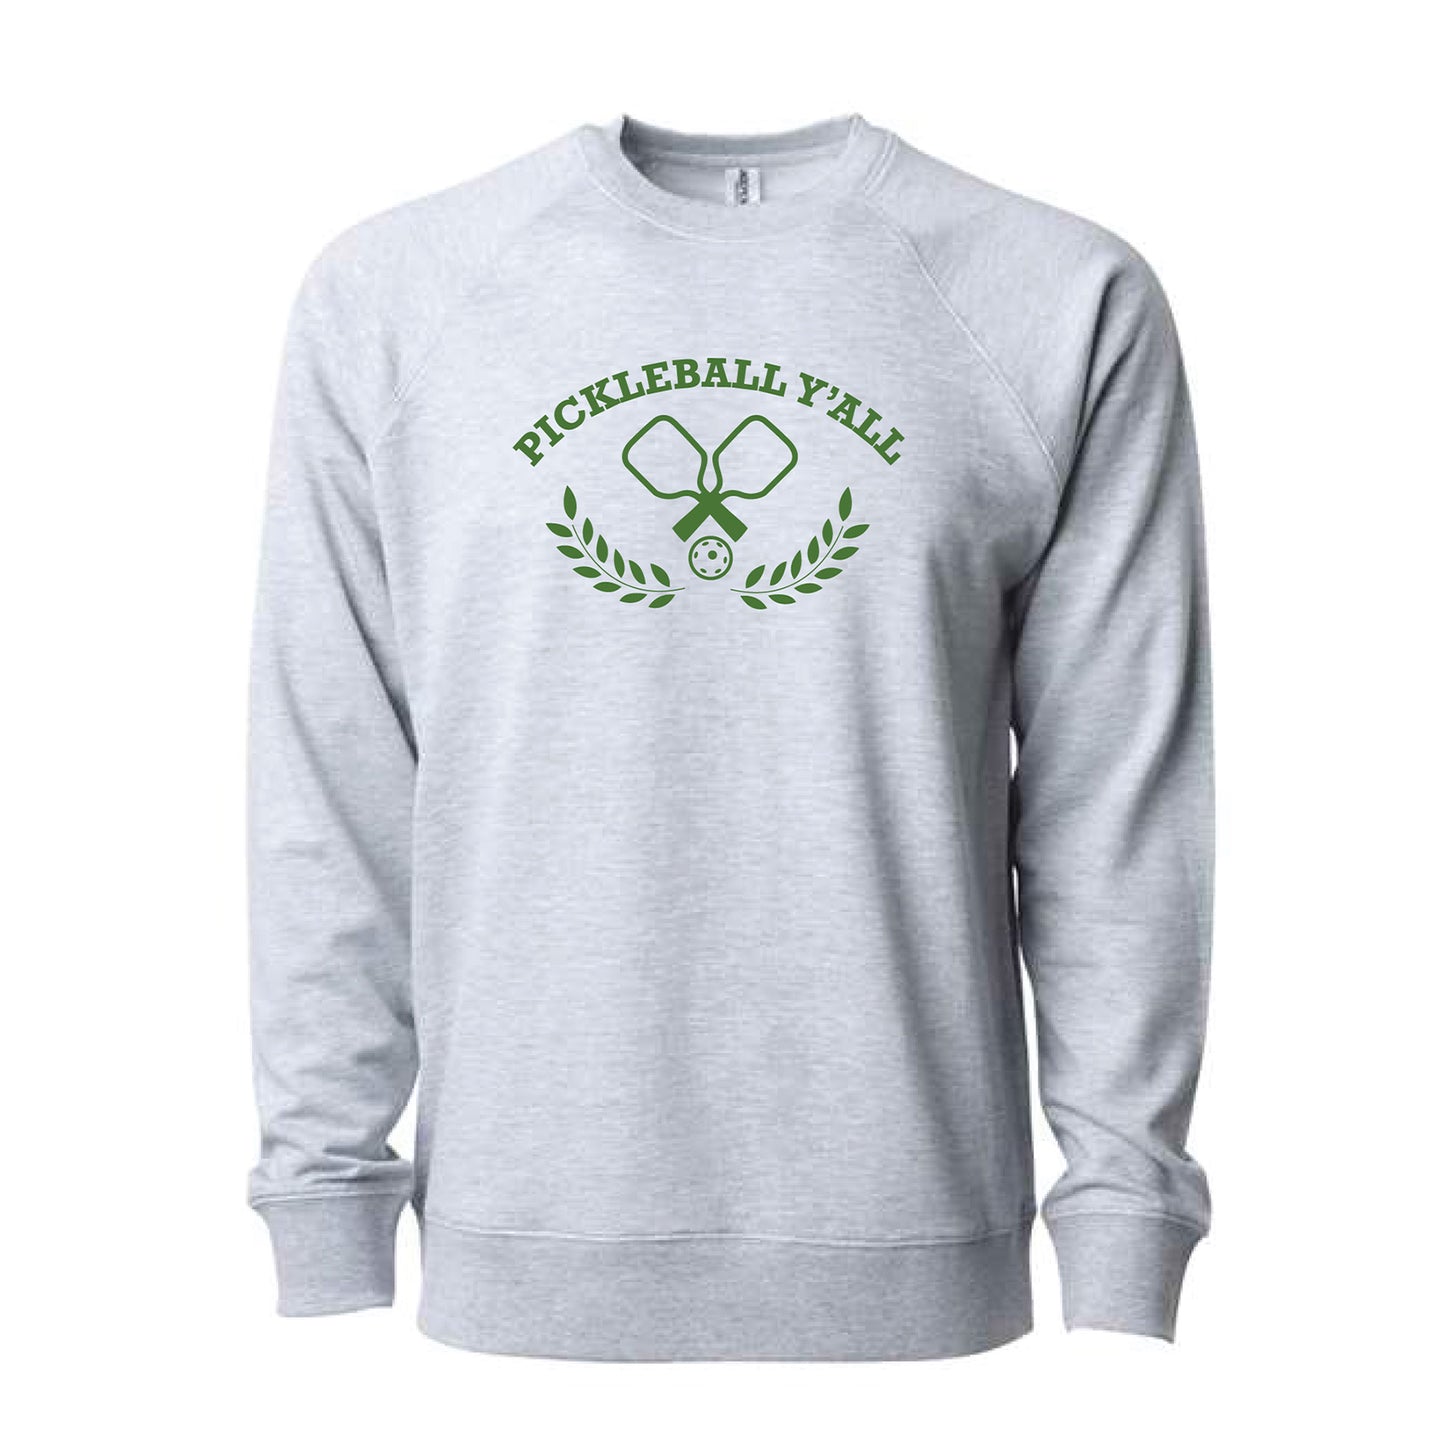 Pickleball Y'all Crewneck Sweatshirt